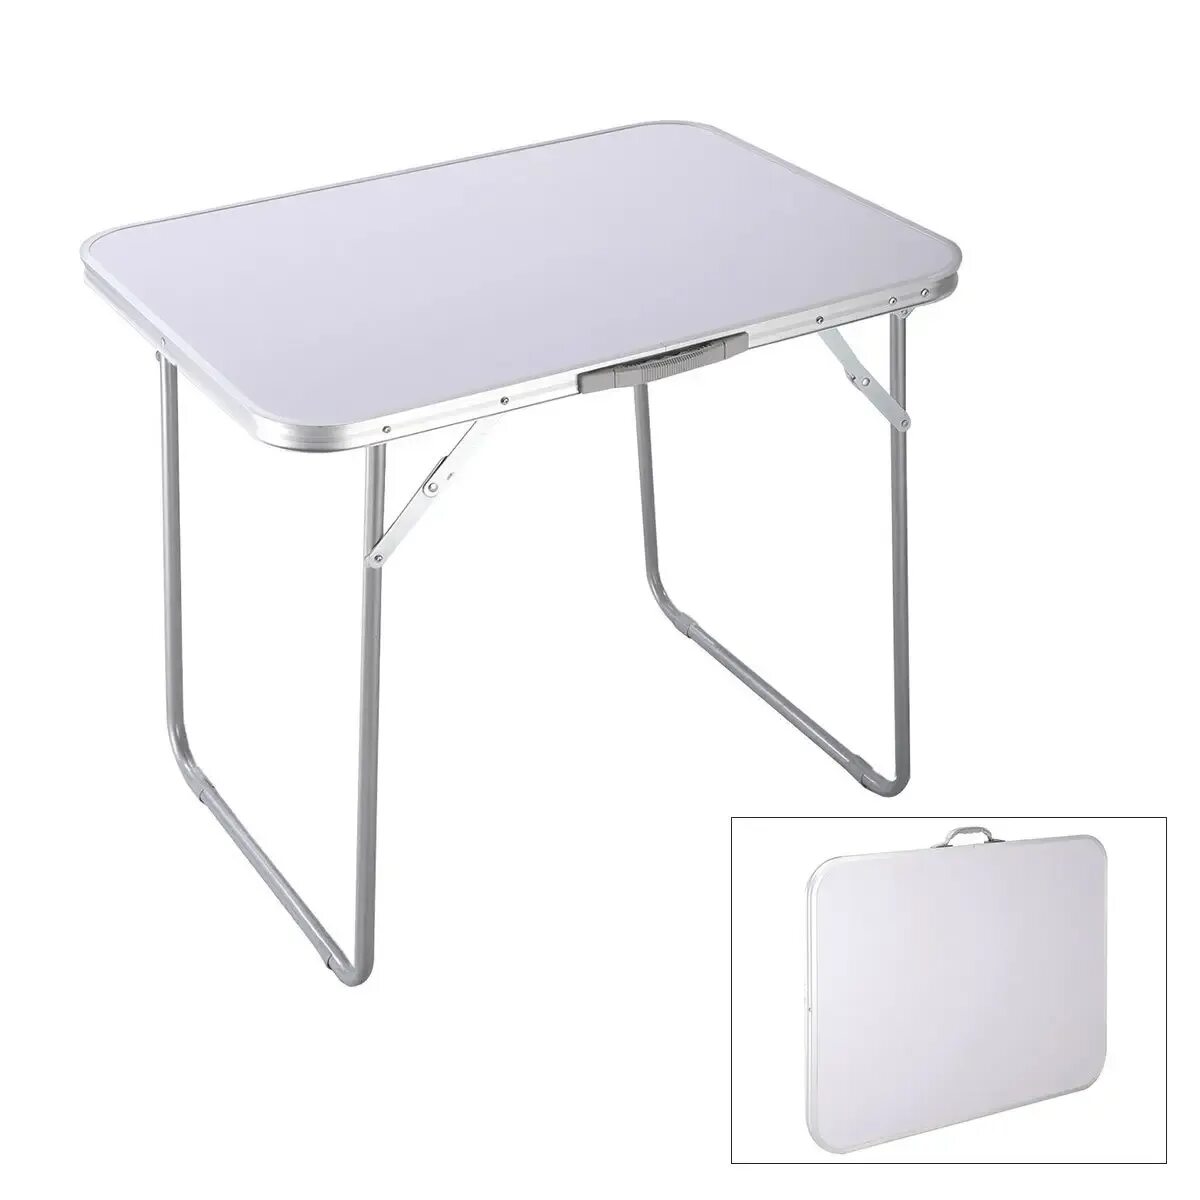 Стол высота 120. Стол Tramp Compact TRF-062. Стол складной Tramp Roll. Lifetime стол складной черный. Раскладной мини столик.